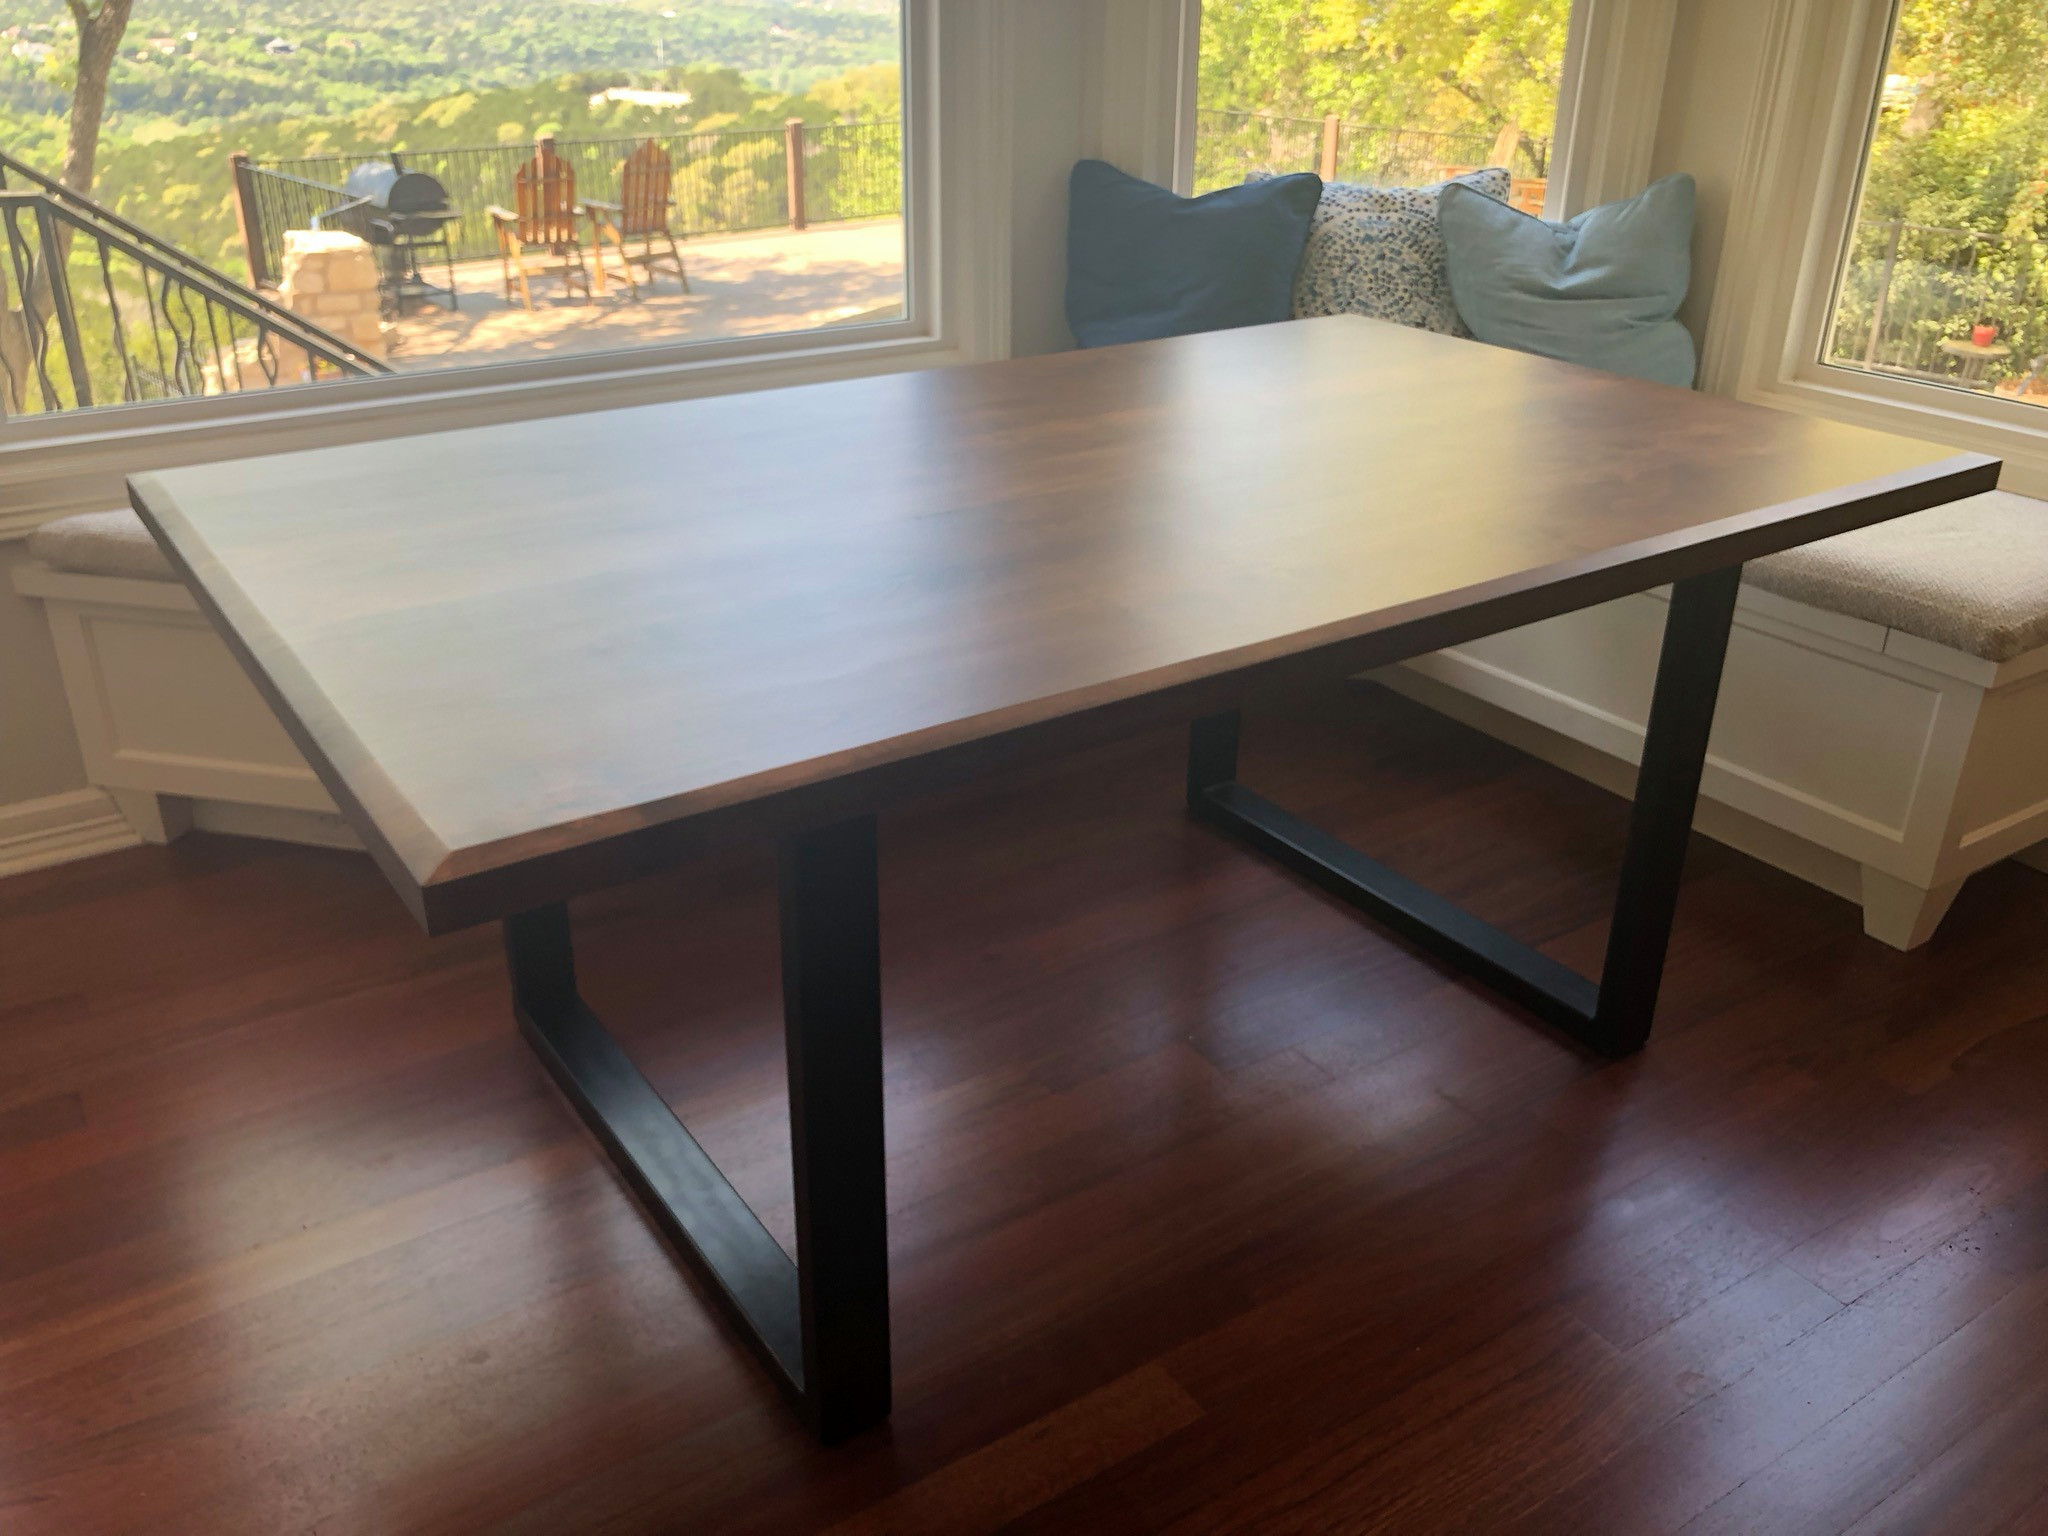 Custom Tables